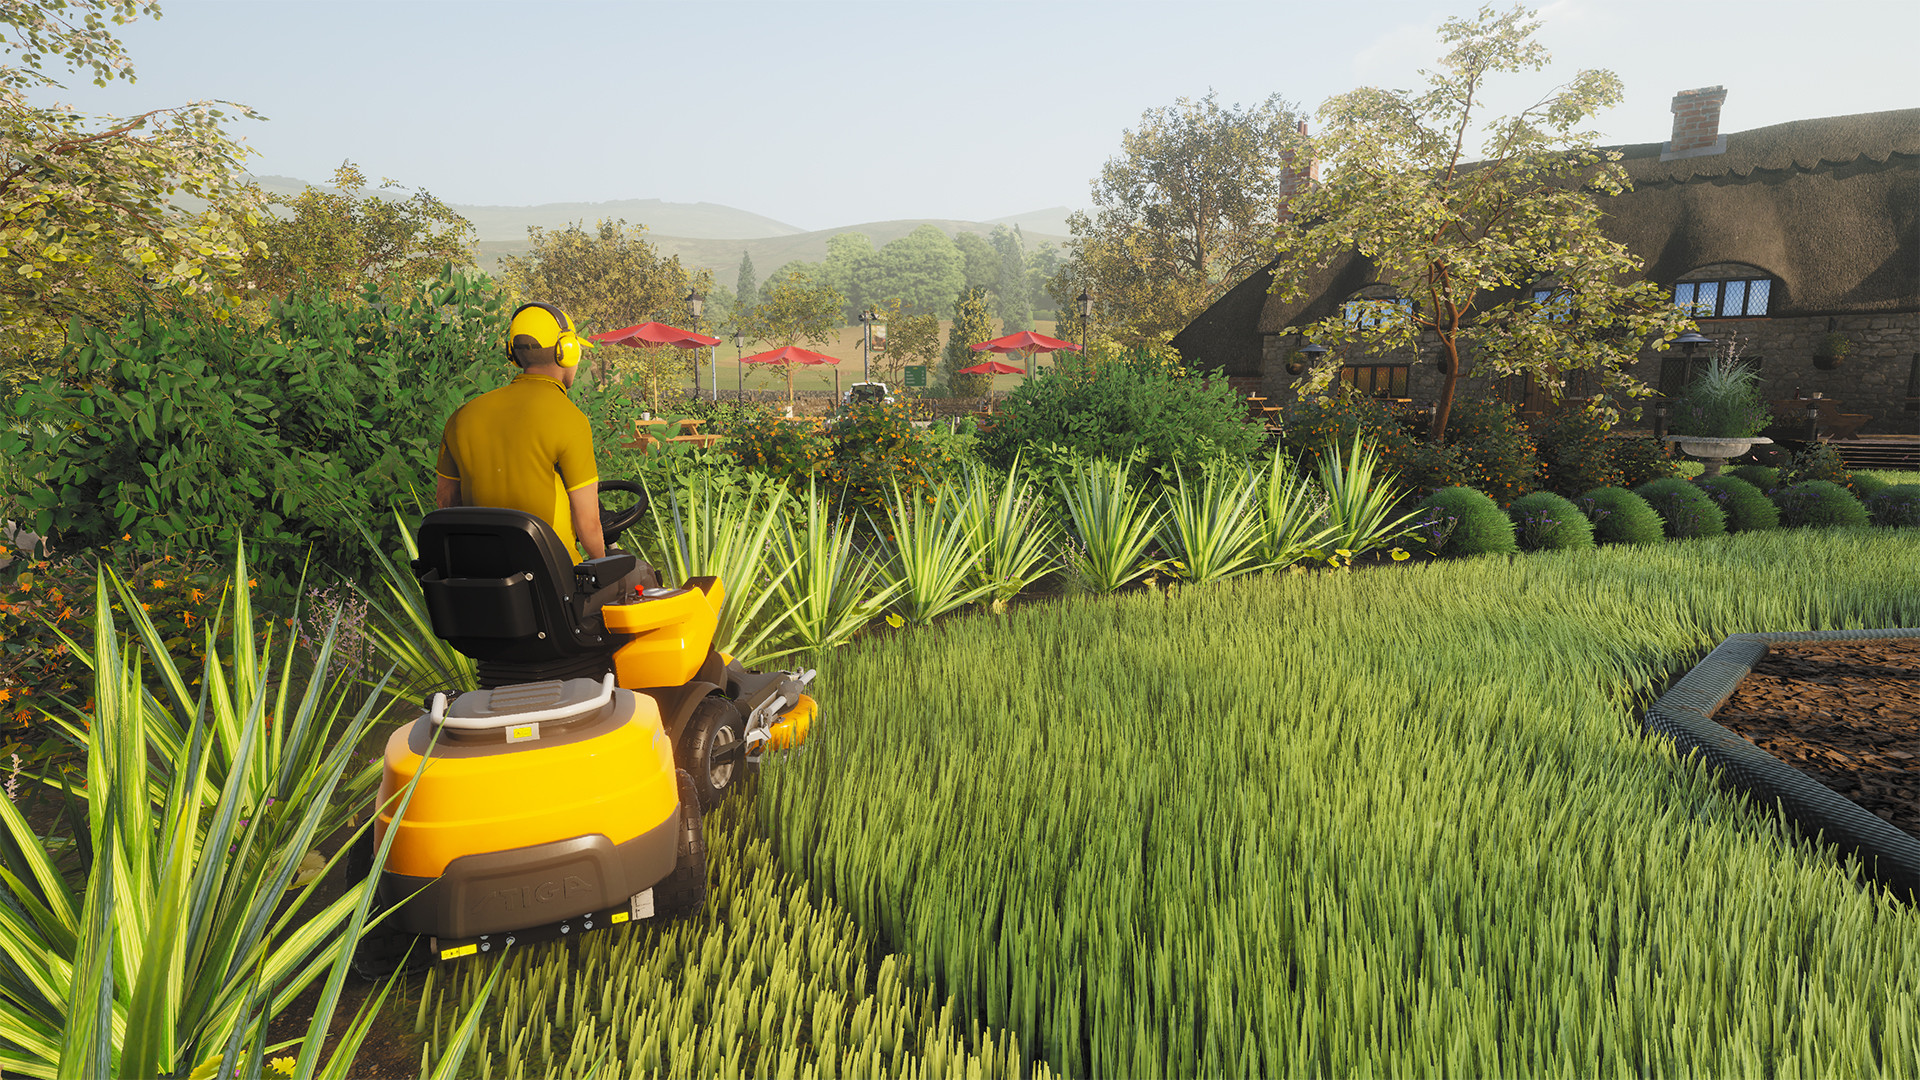 Lawn Mowing Simulator - Ancient Britain Featured Screenshot #1